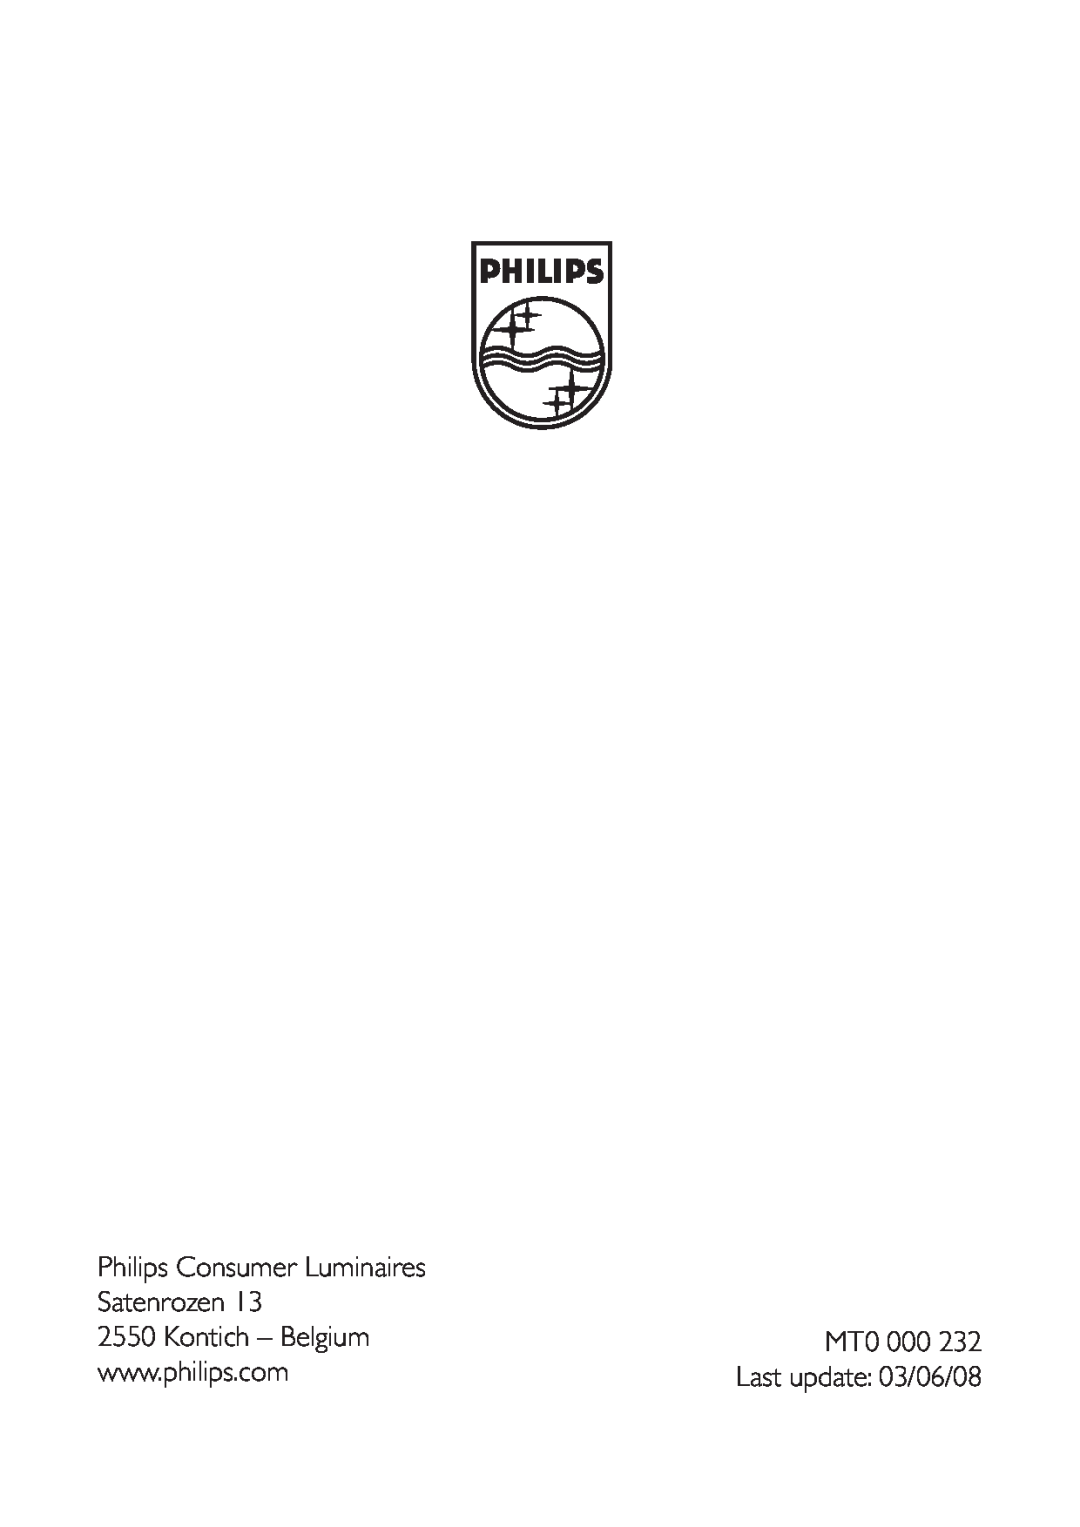 Philips 66702/30/16 user manual Philips Consumer Luminaires, Satenrozen, Kontich - Belgium, MT0 000, Last update 03/06/08 